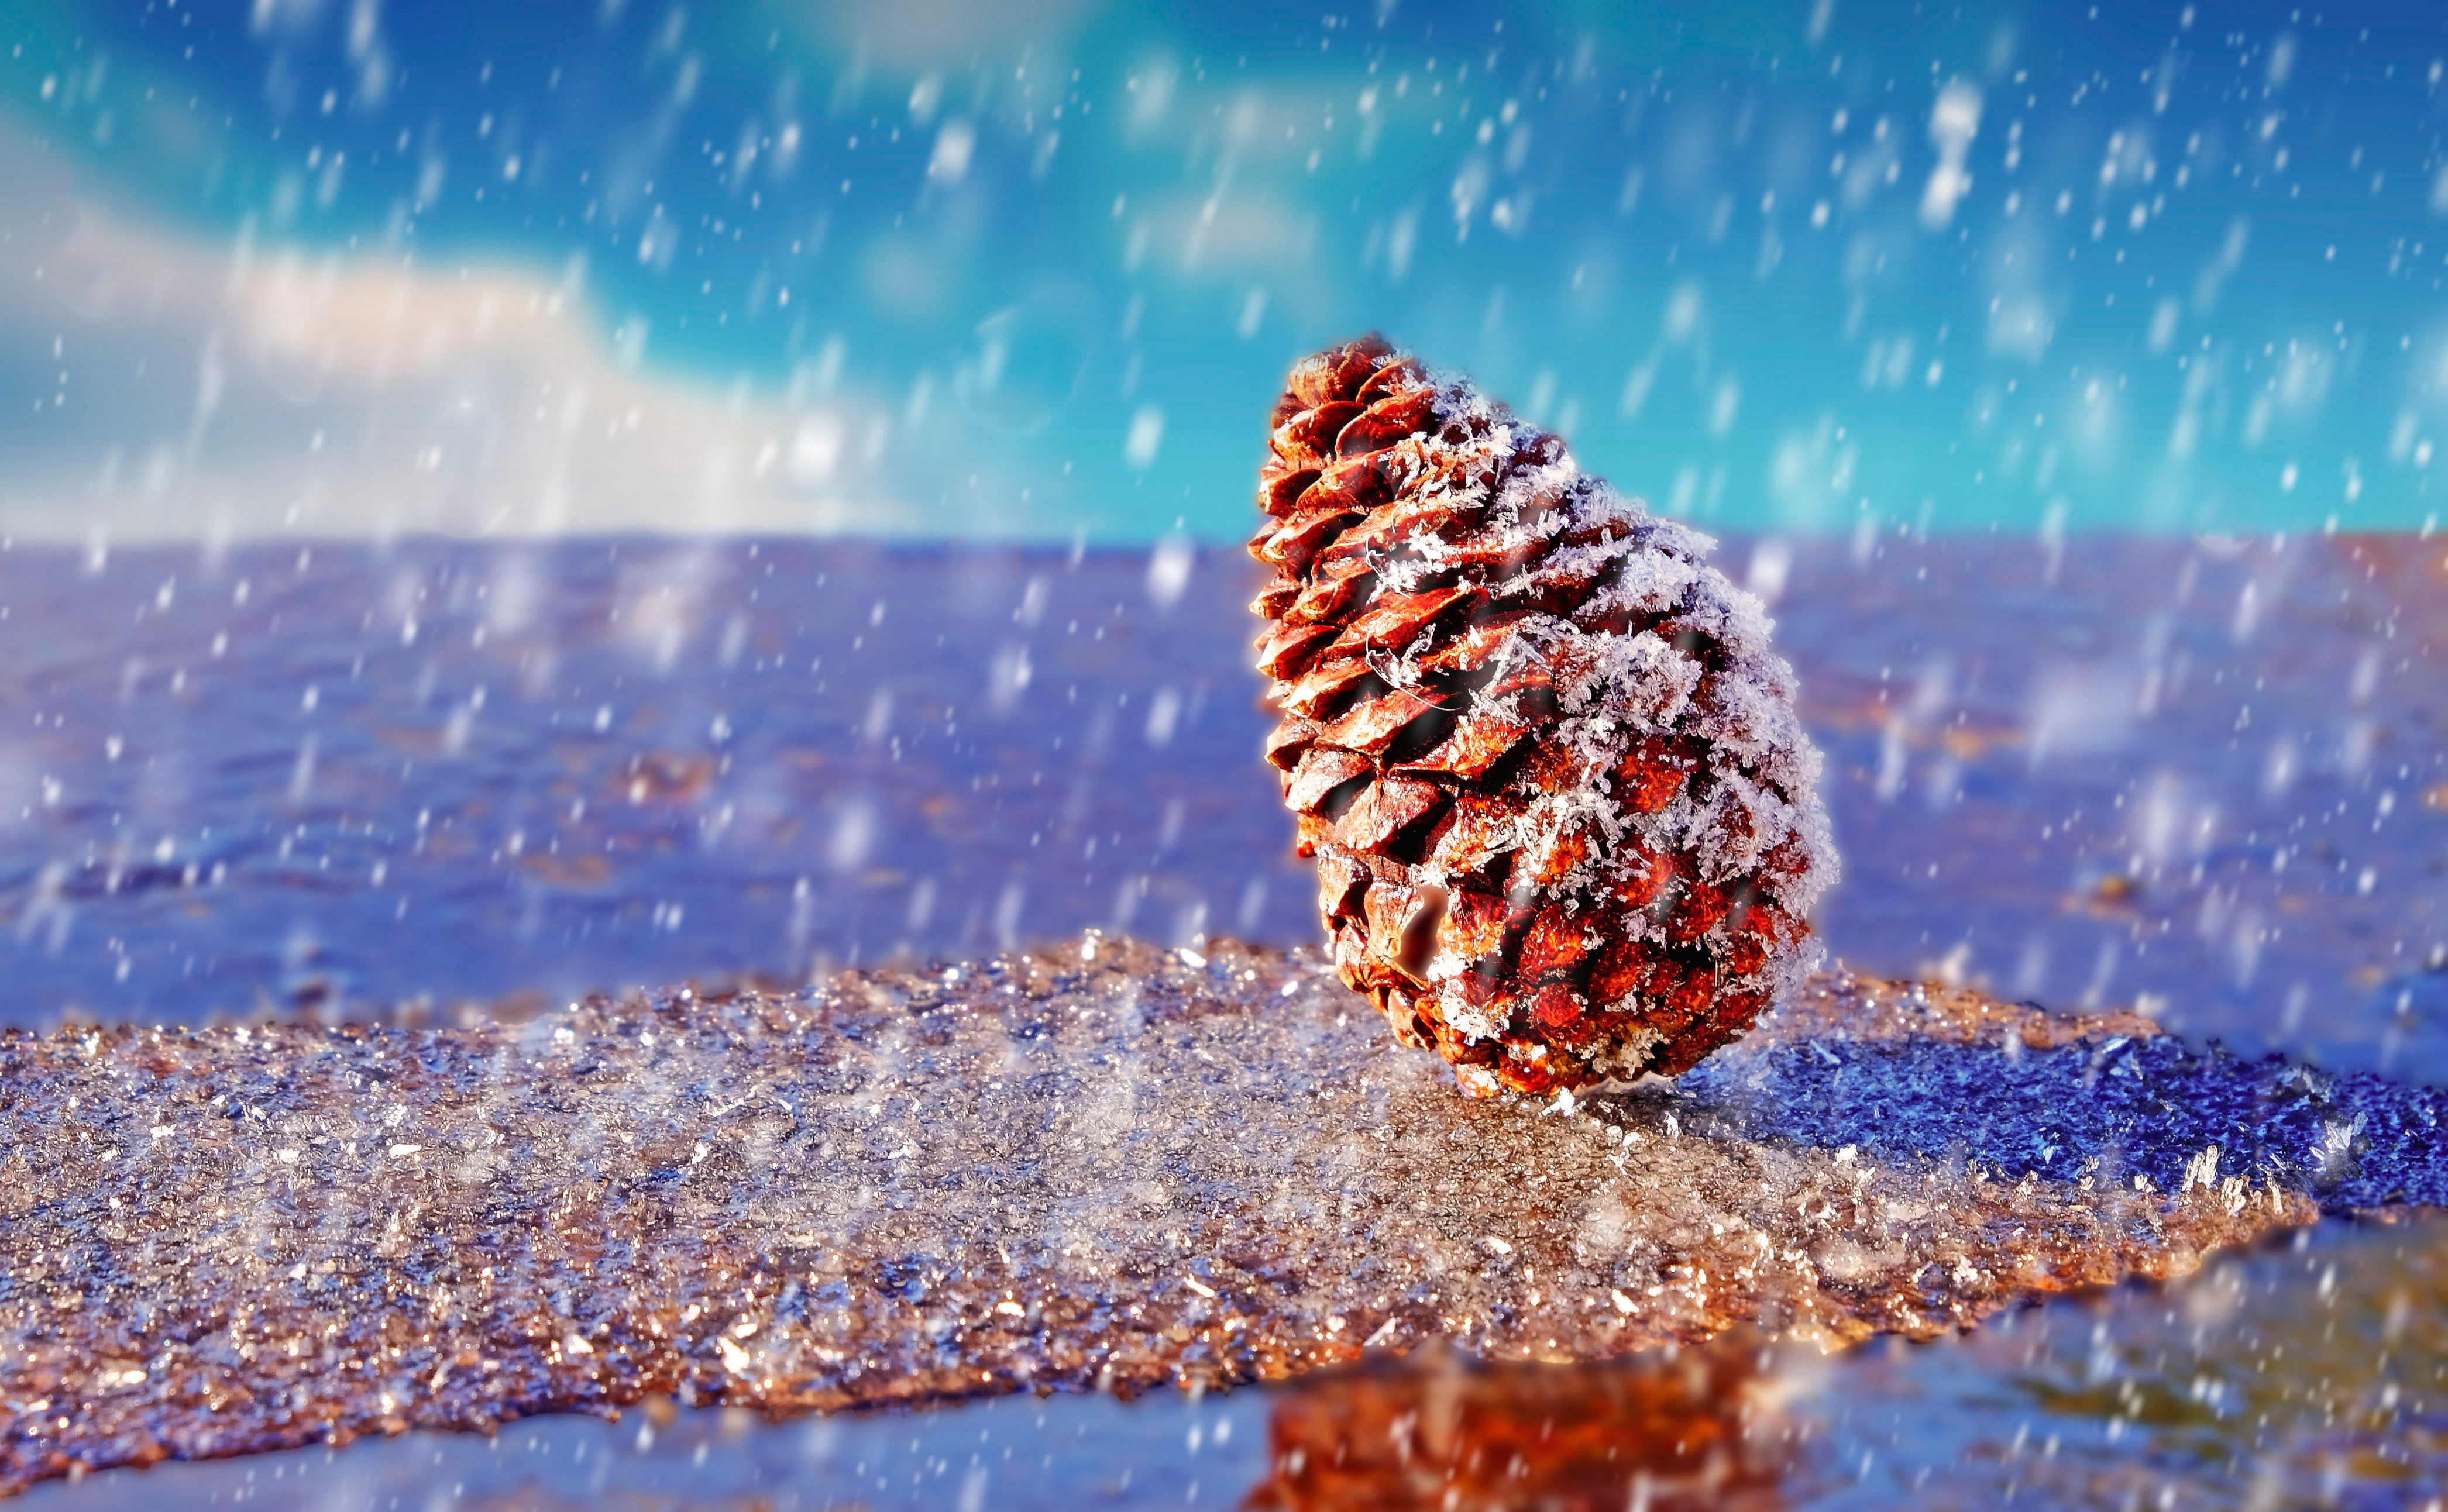 Snow Pine Cones Rain Water Drops 4184x2585